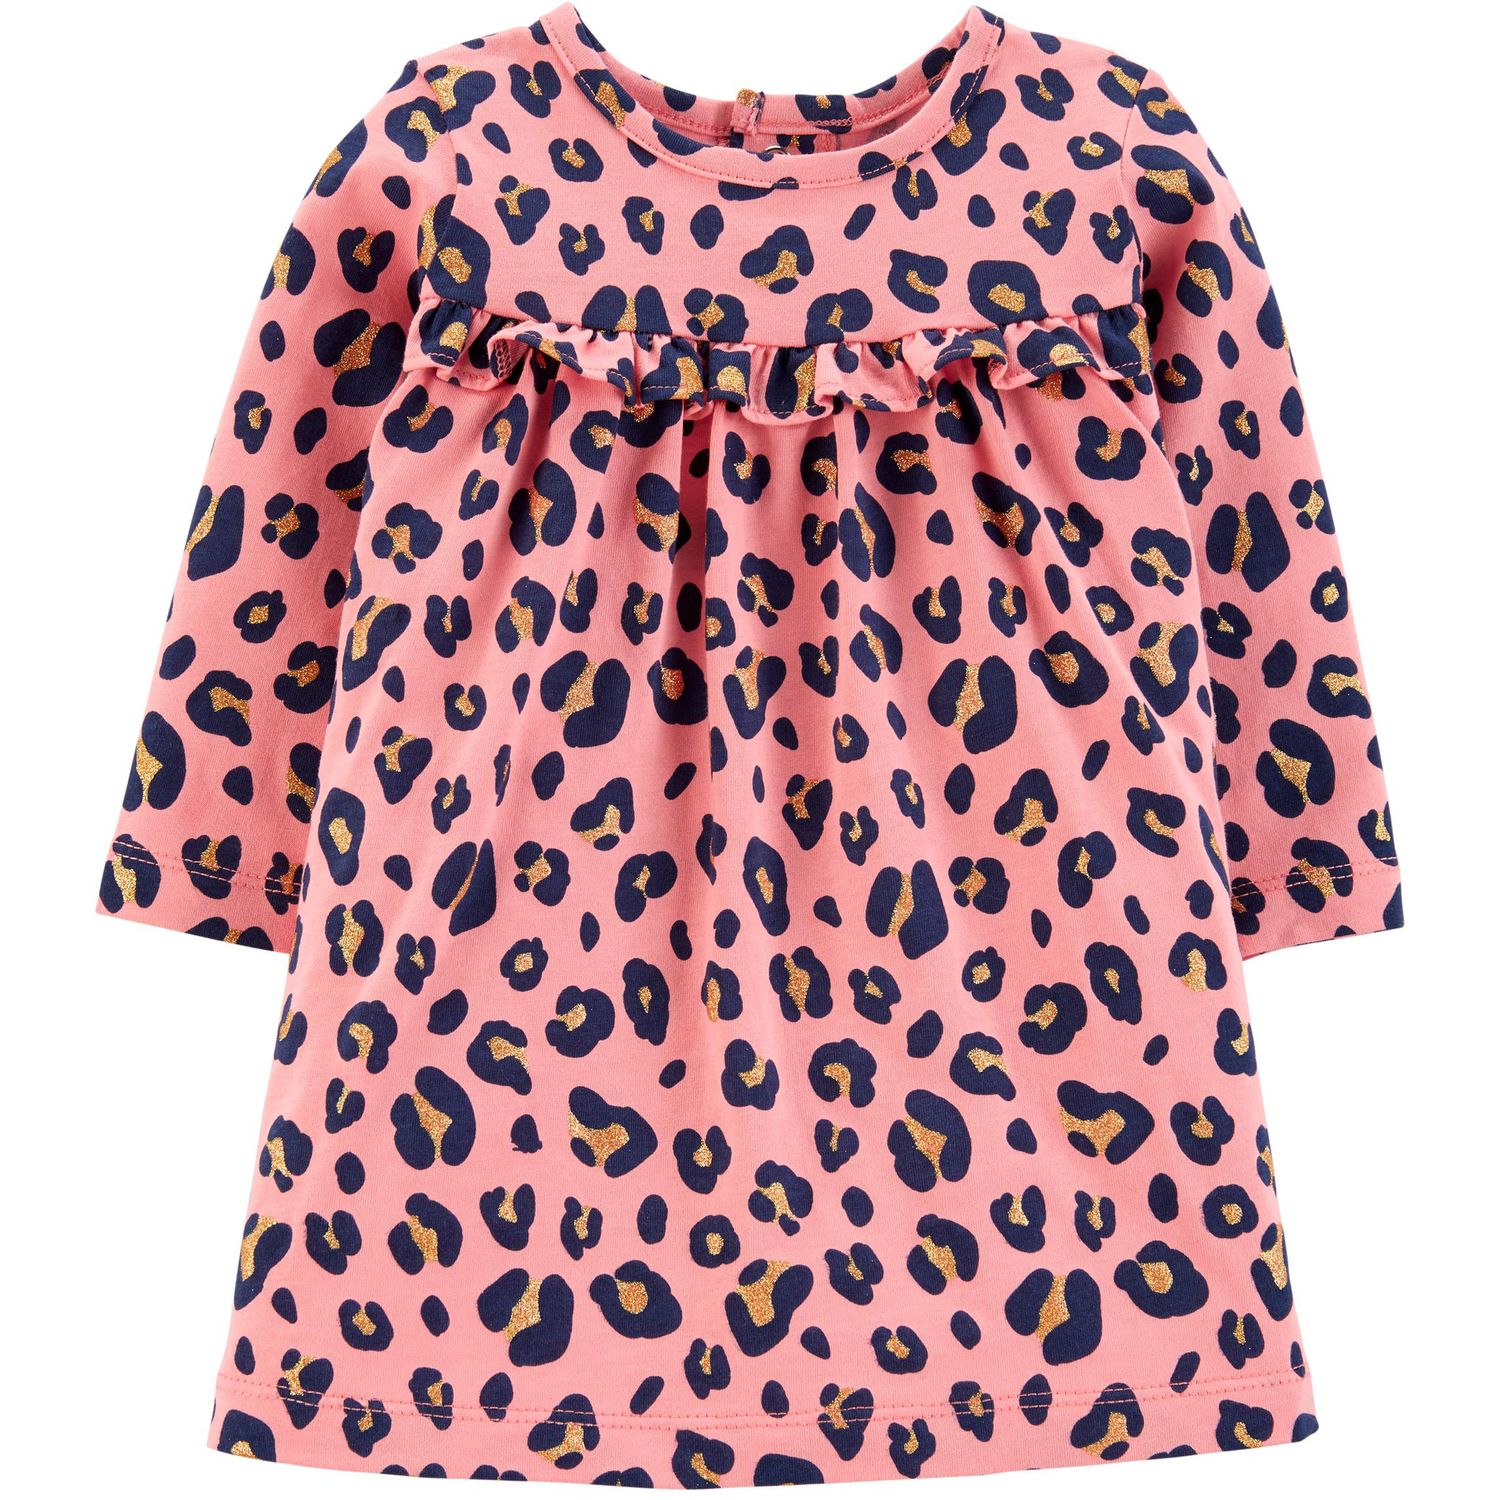 leopard print jersey dress